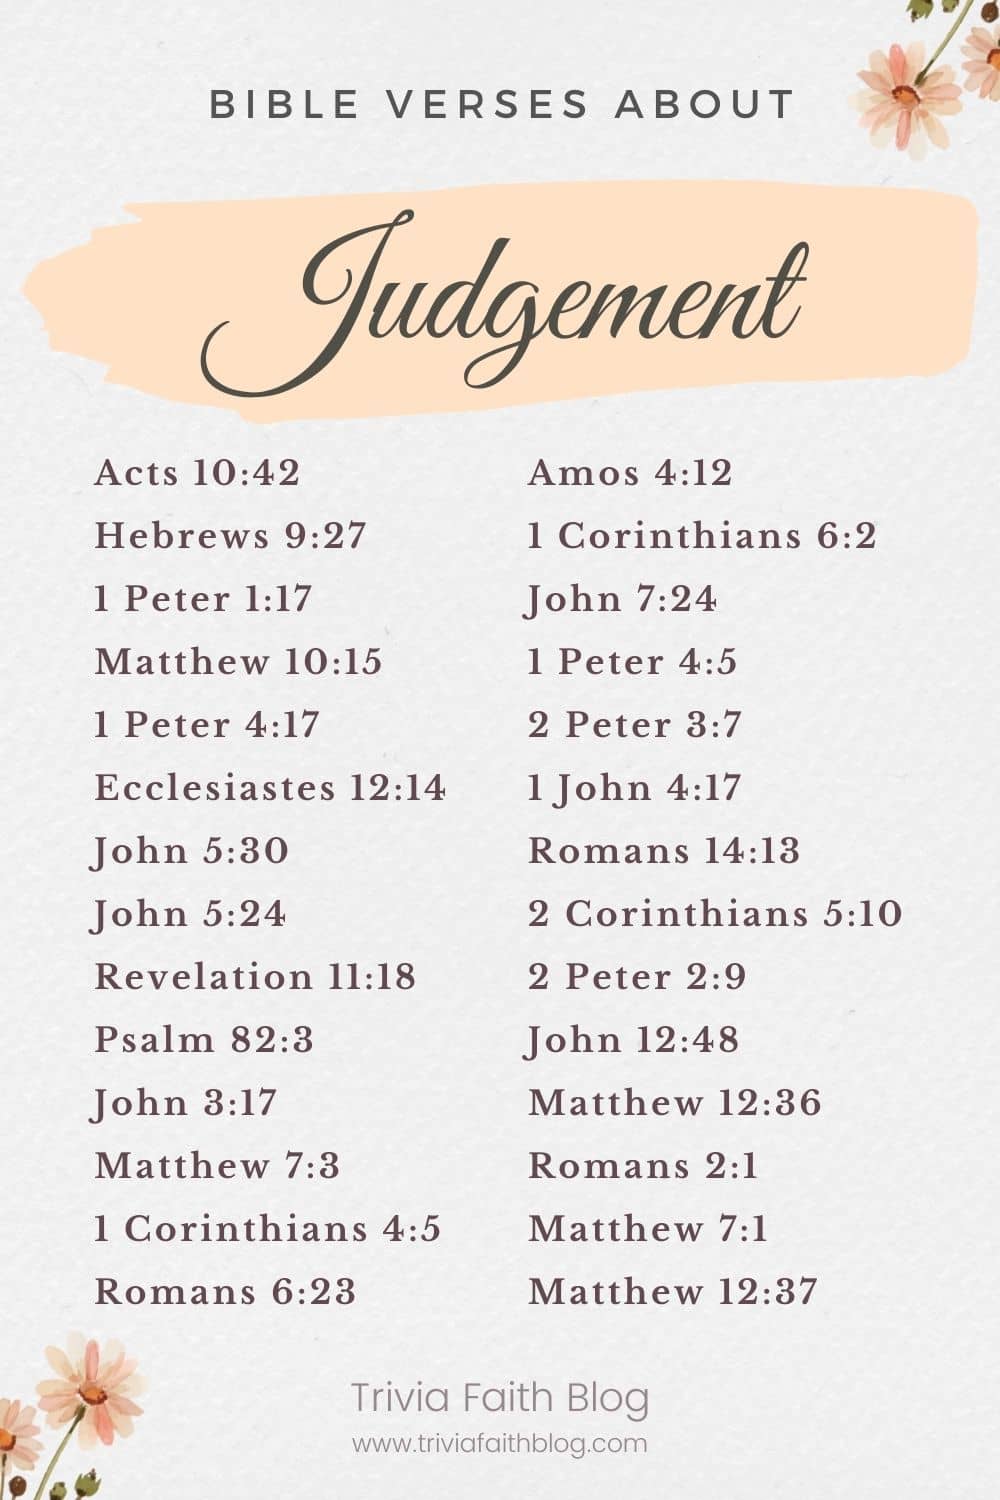 Bible verses about judgement